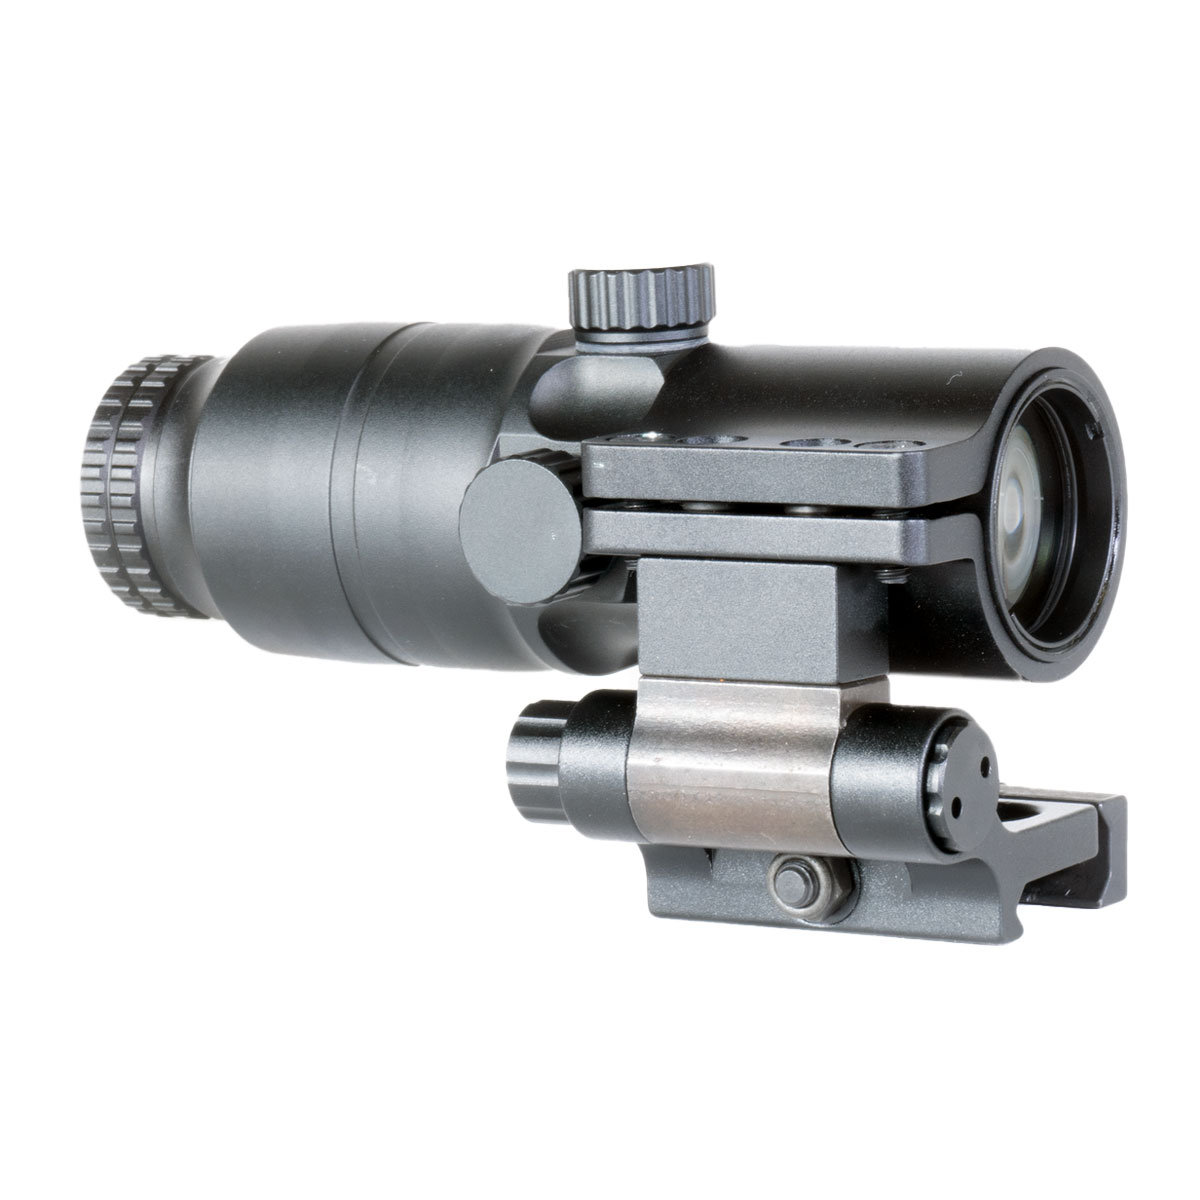 SHOTAC Compact High Precision 4x Magnifier ST 4x25